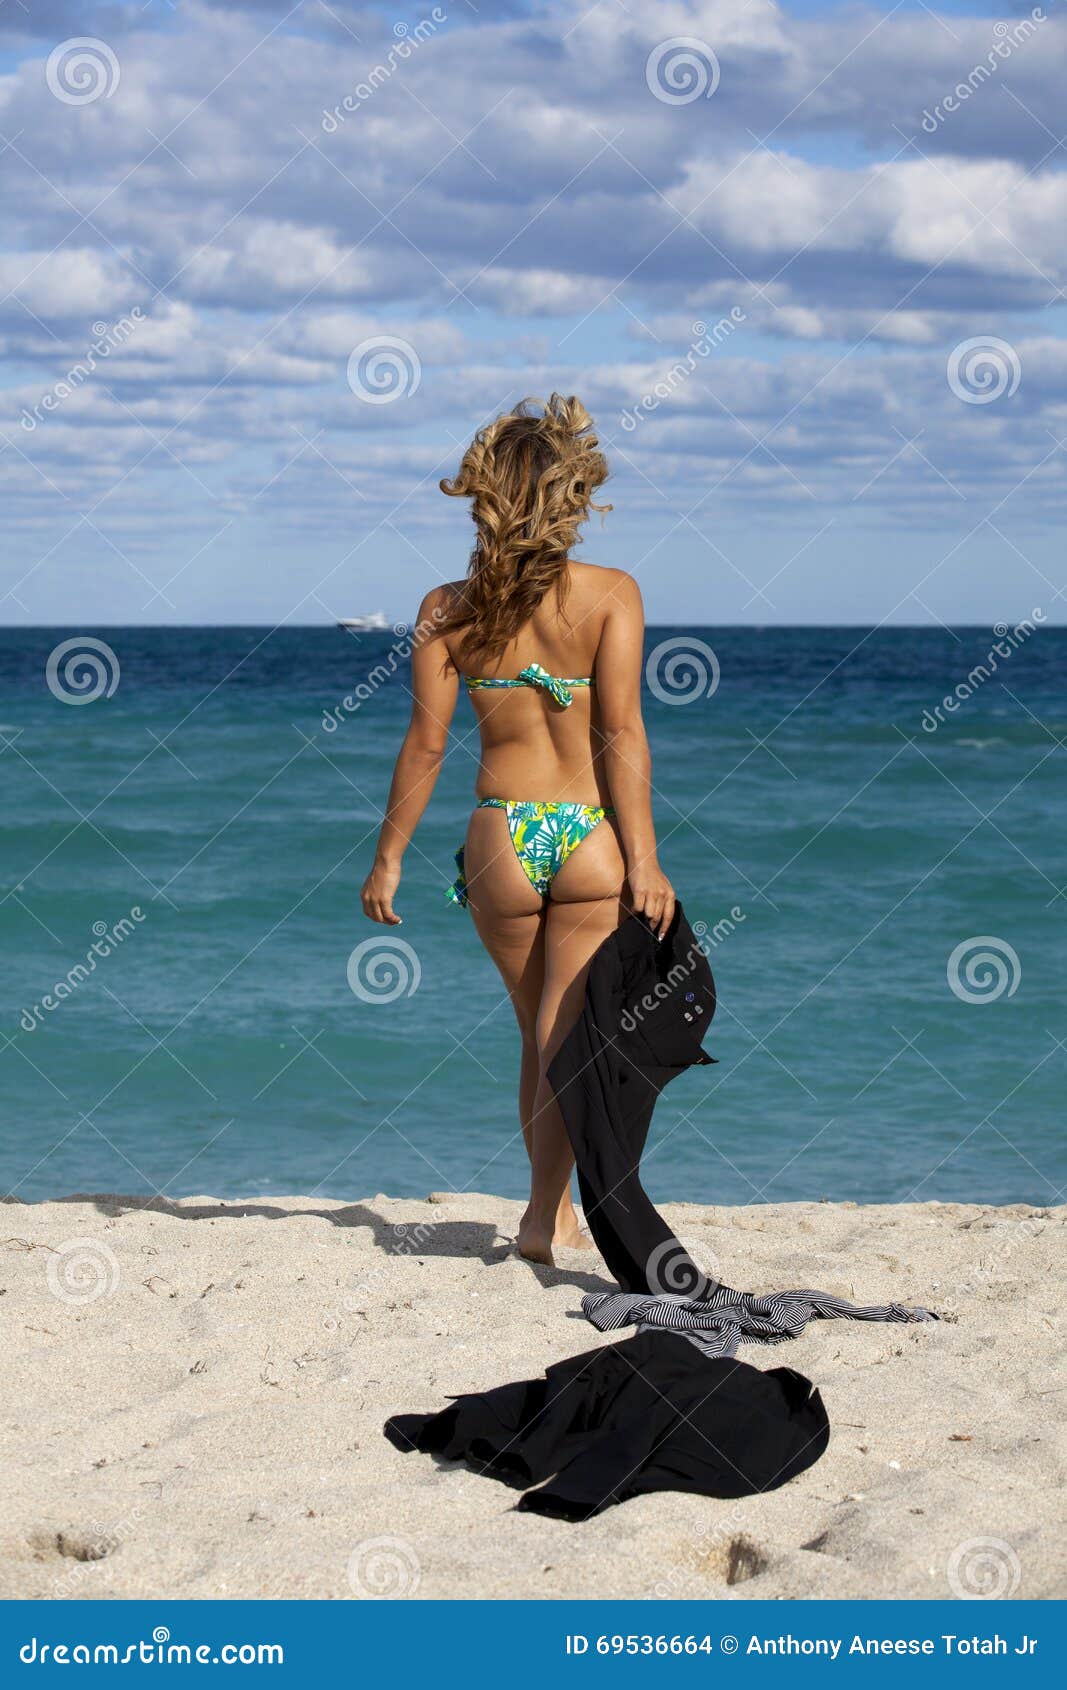 https://thumbs.dreamstime.com/z/business-metaphor-working-vacation-beautiful-woman-taking-off-suit-revealing-bikini-tropical-beach-69536664.jpg